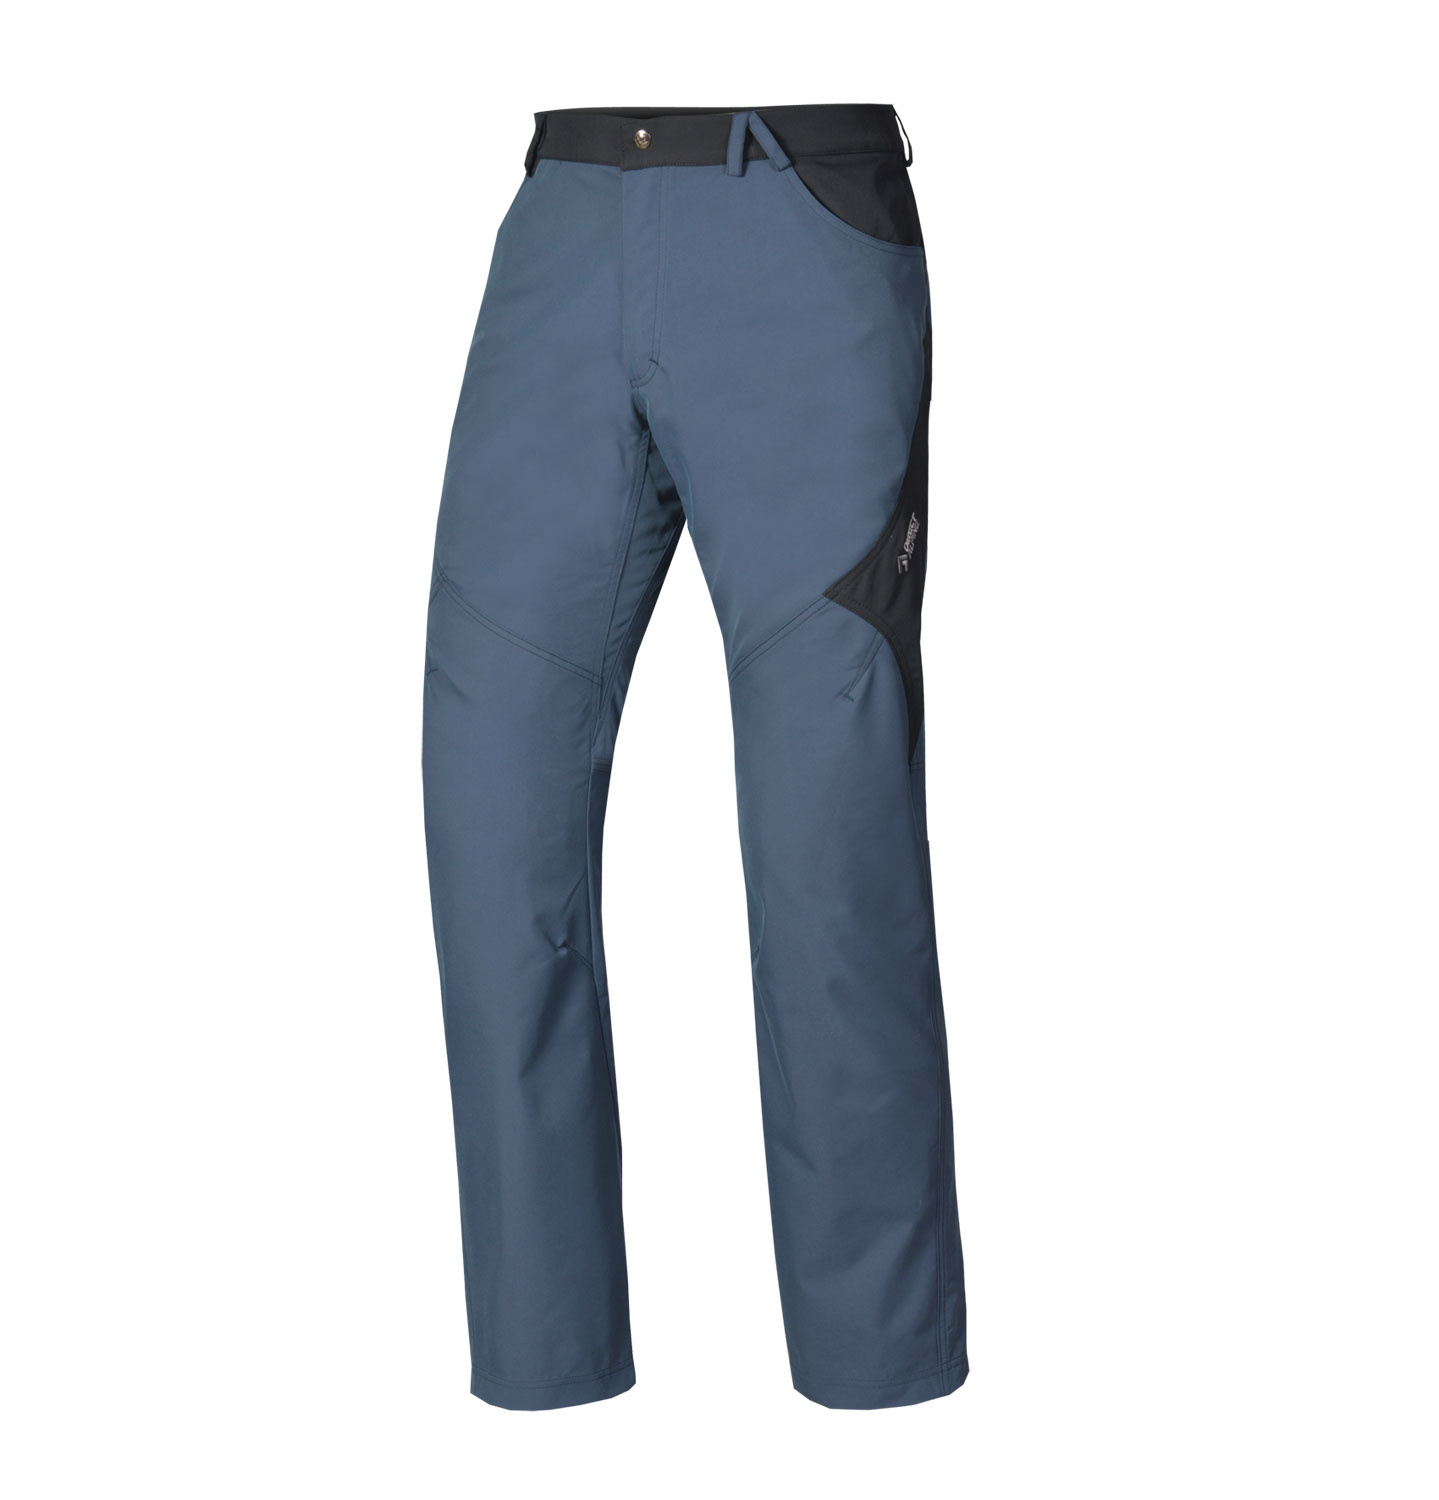 Direct Alpine kalhoty PATROL FIT Barva: greyblue/black, Velikost: M